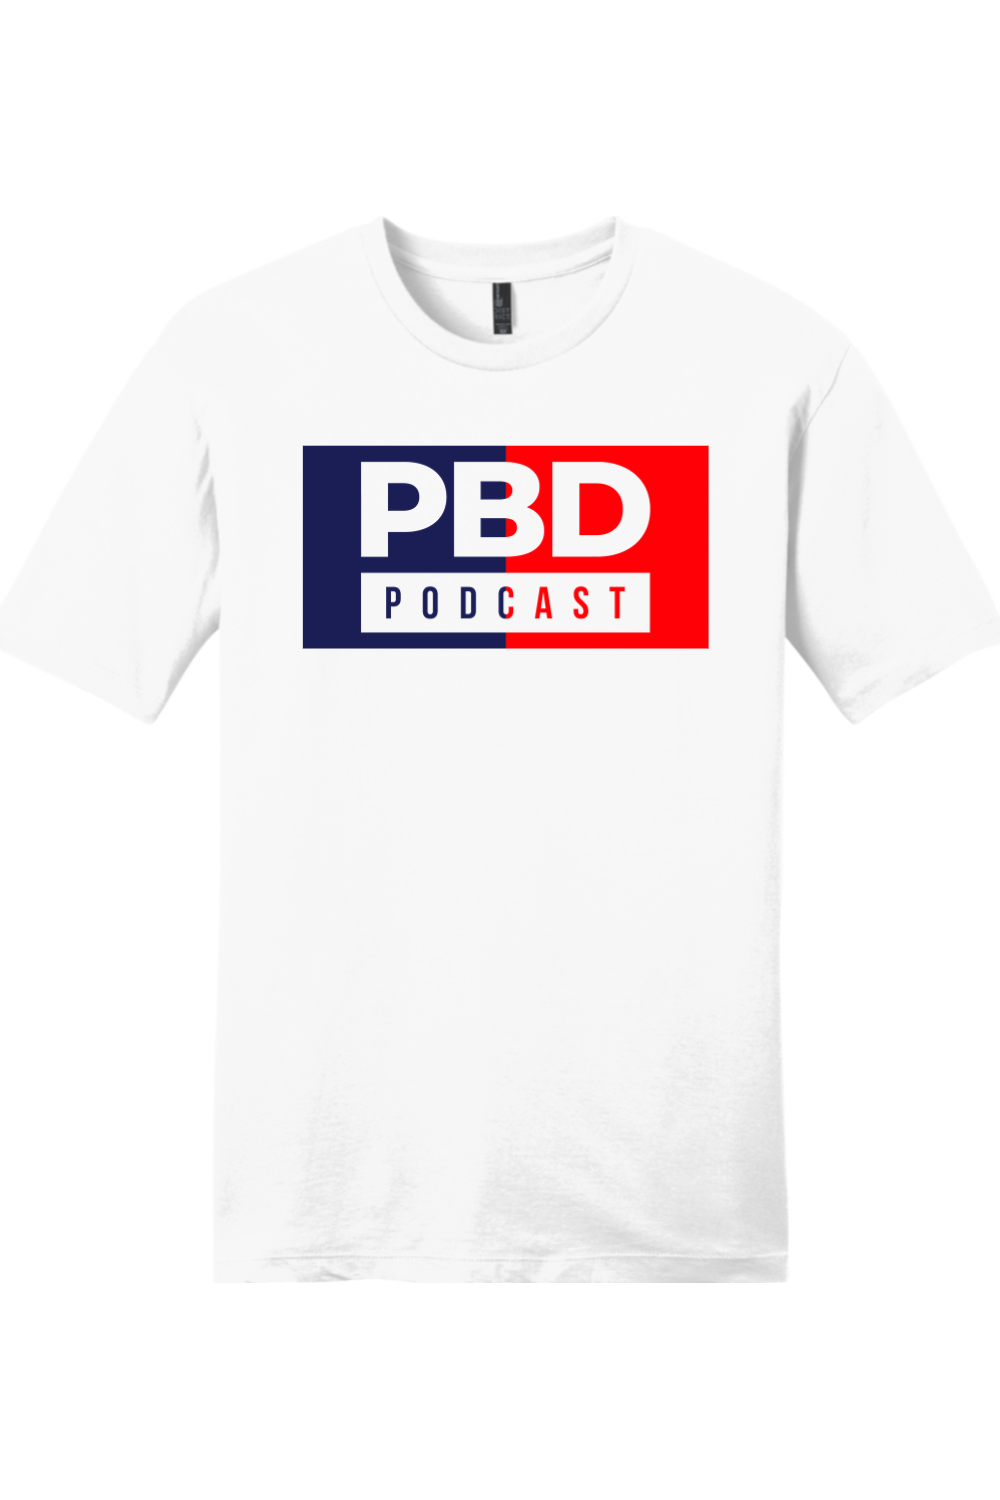 PBD Podcast Tee - New